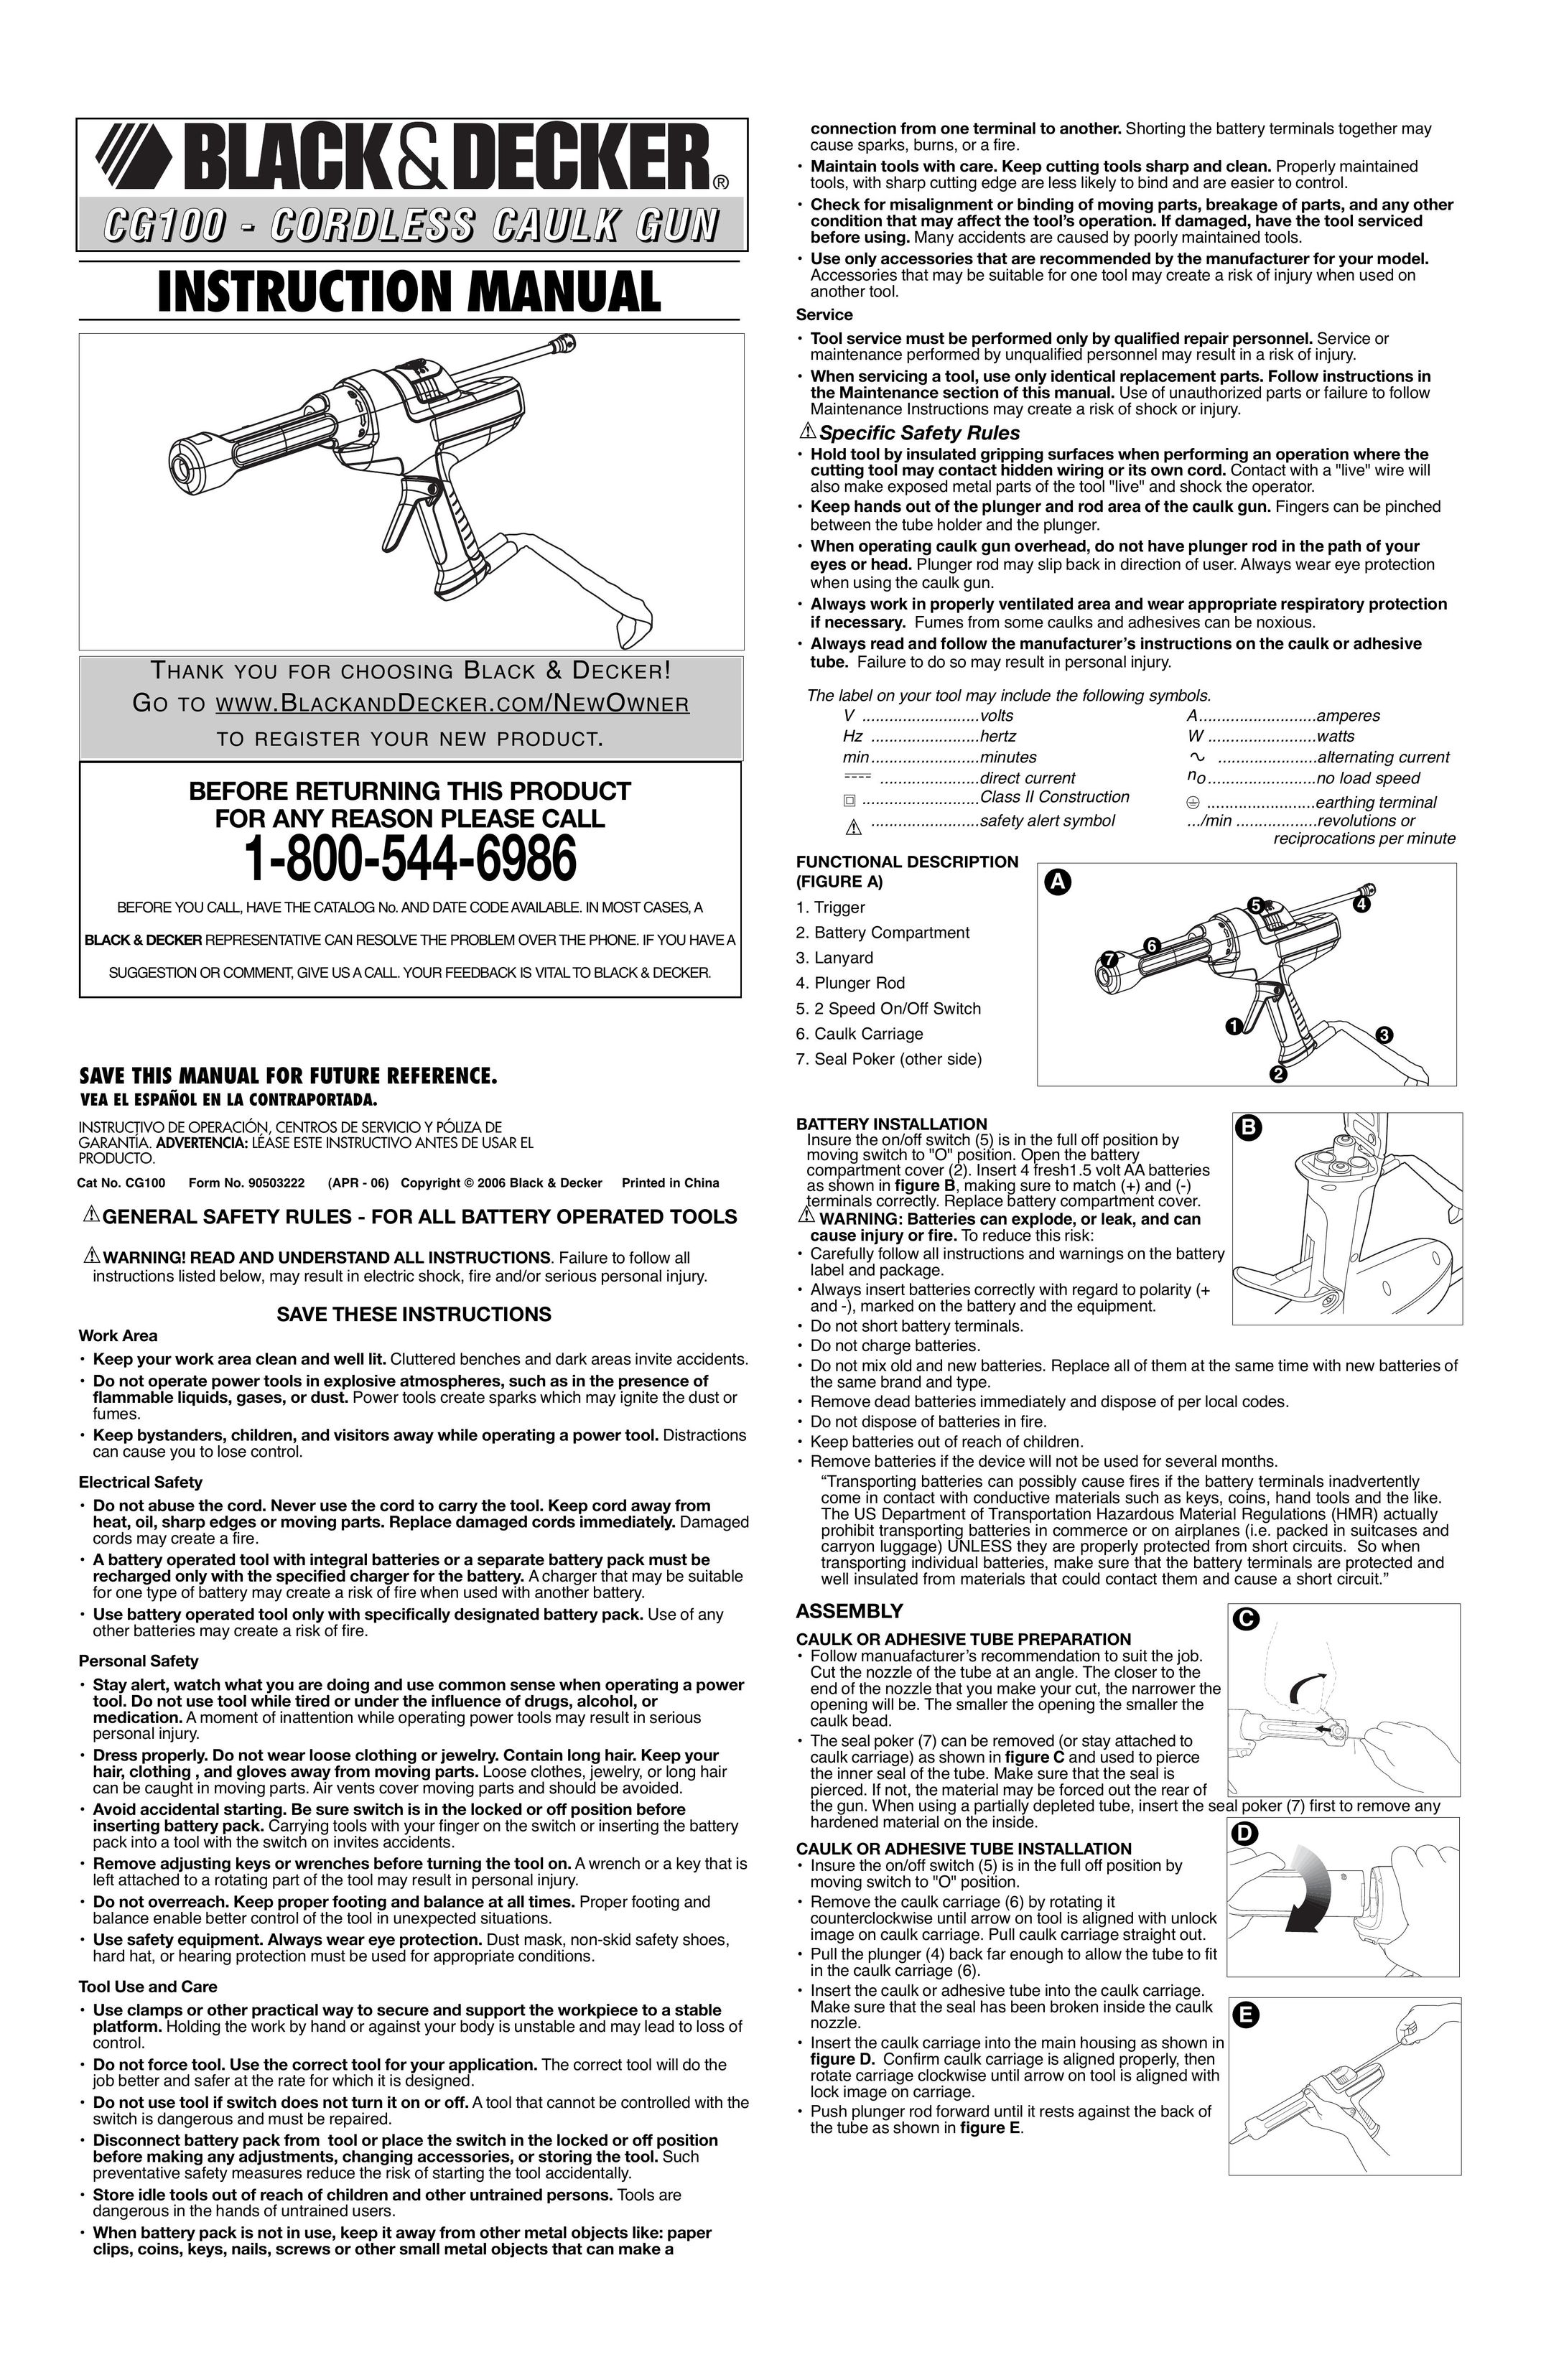 Black & Decker CG100 Caulking Gun User Manual